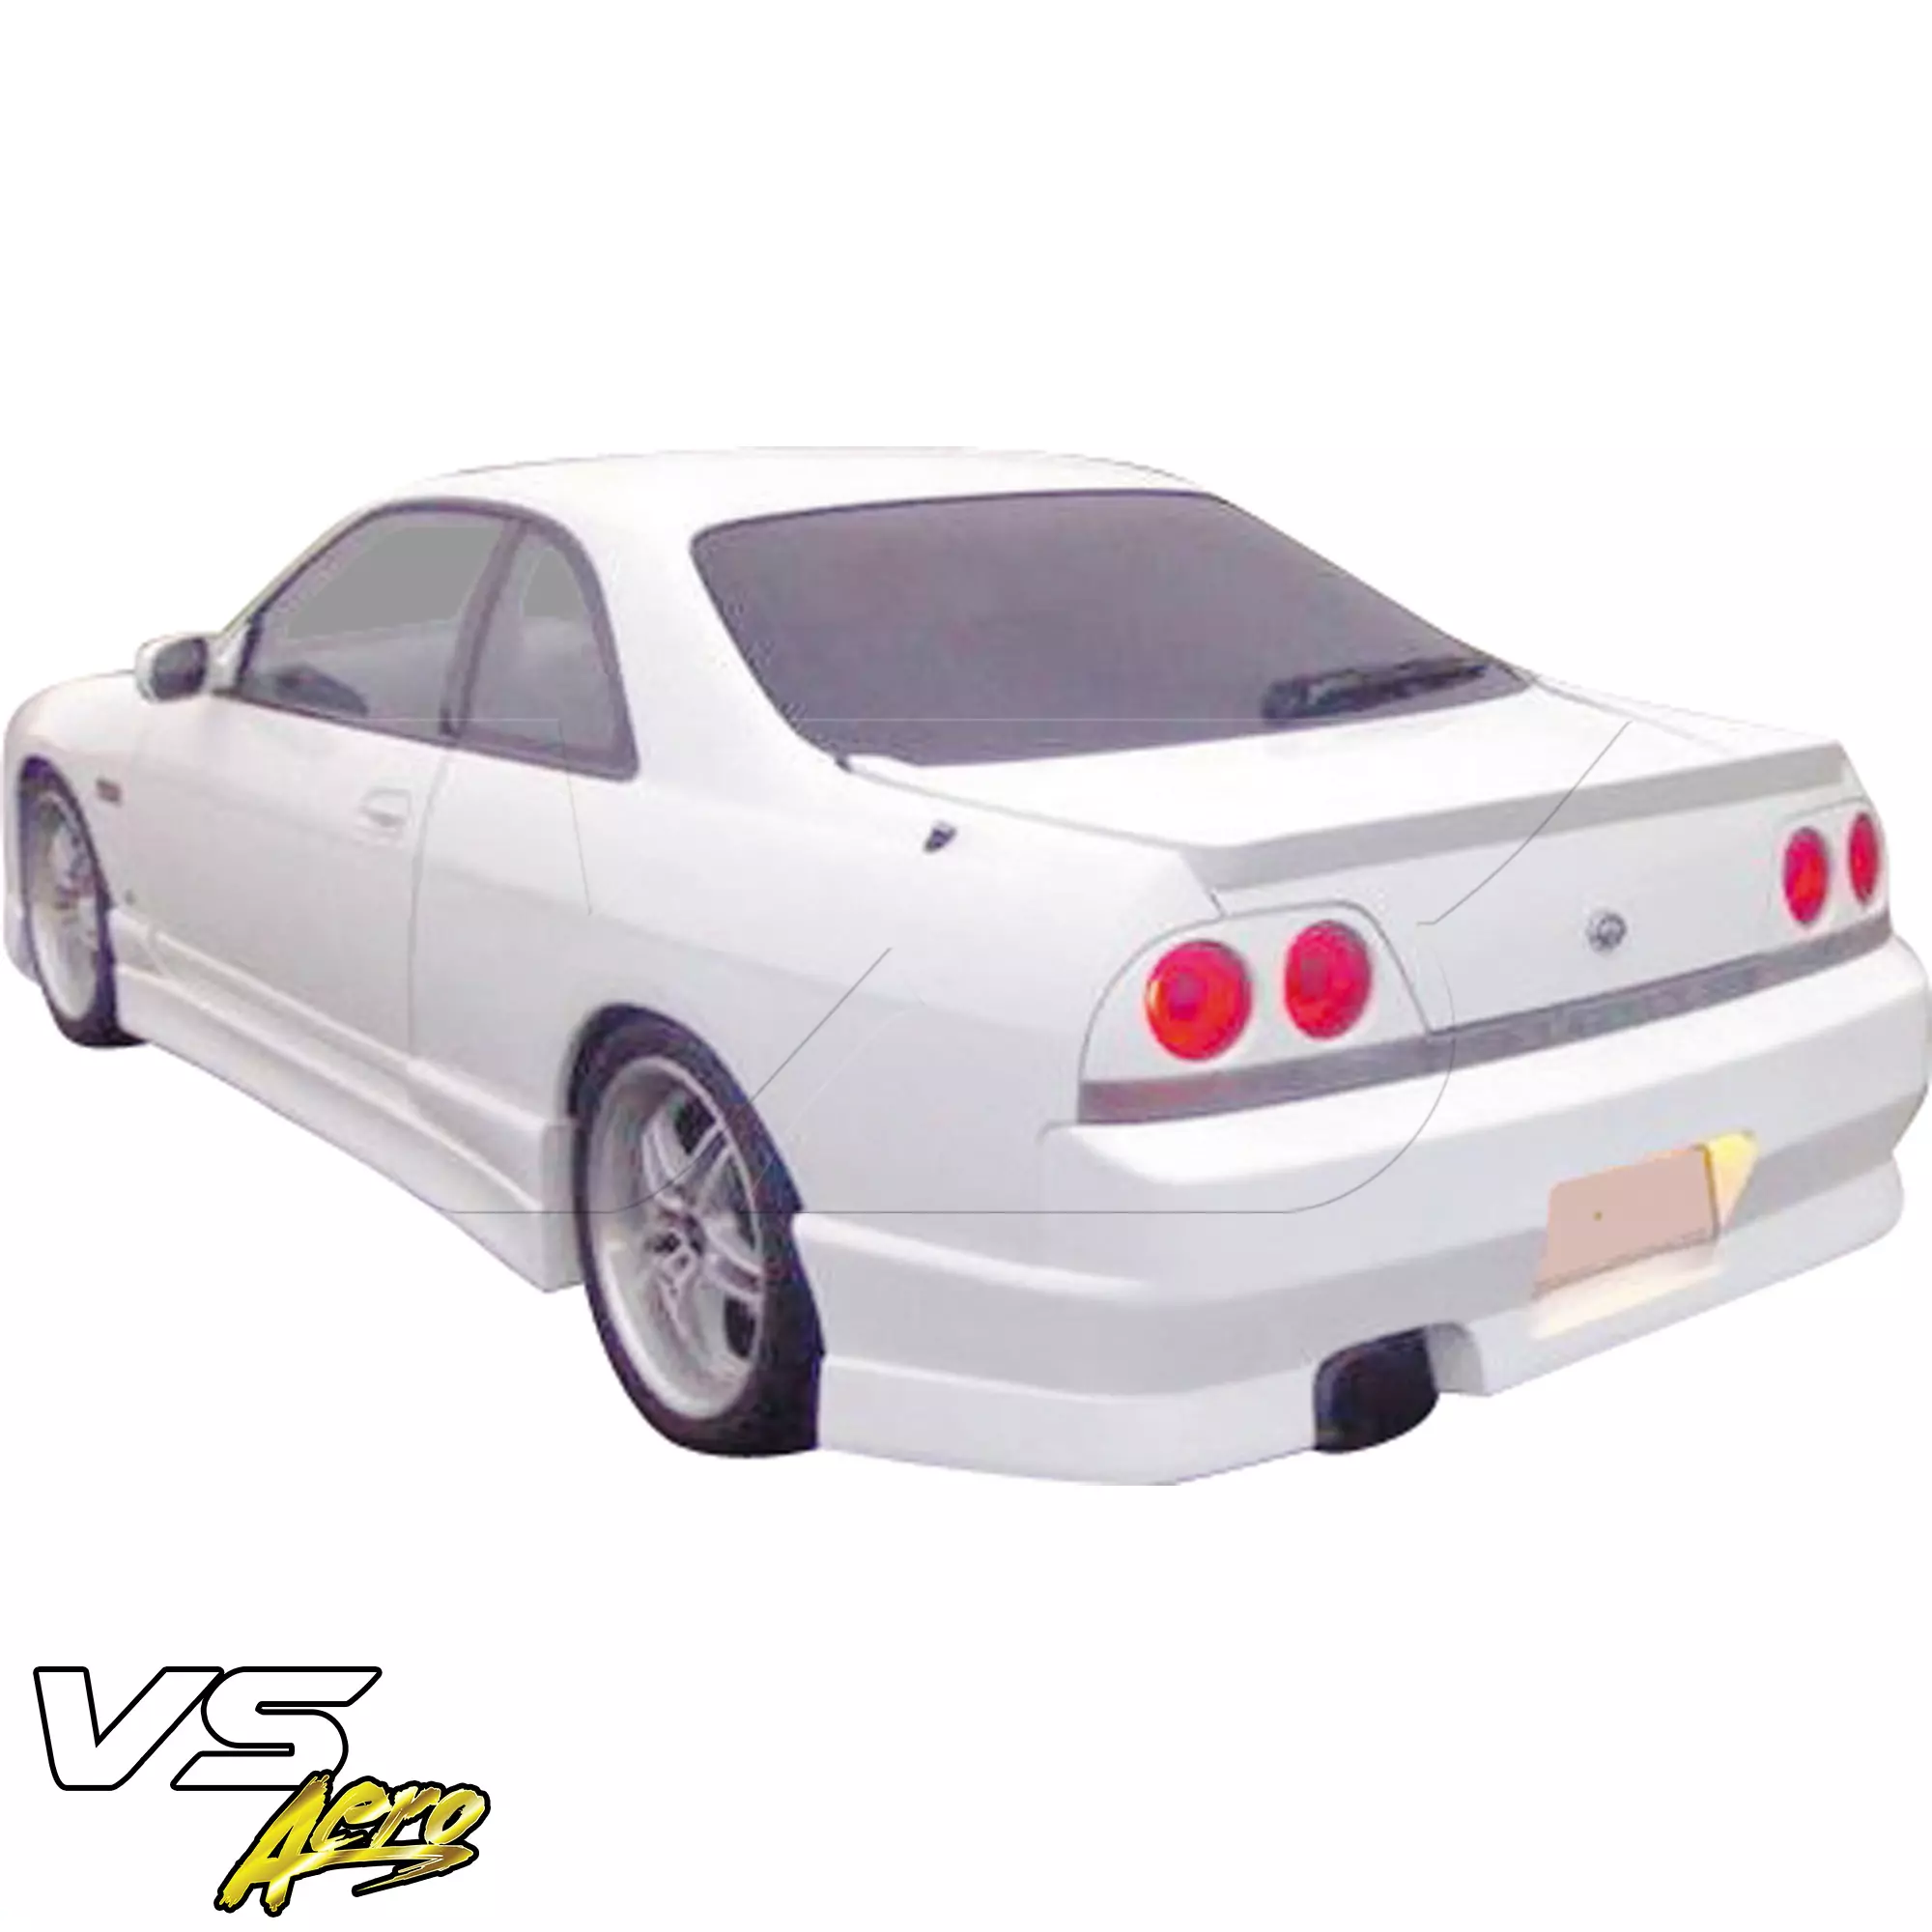 VSaero FRP MSPO v2 Body Kit 4pc > Nissan Skyline R33 GTS 1995-1998 > 2dr Coupe - Image 34